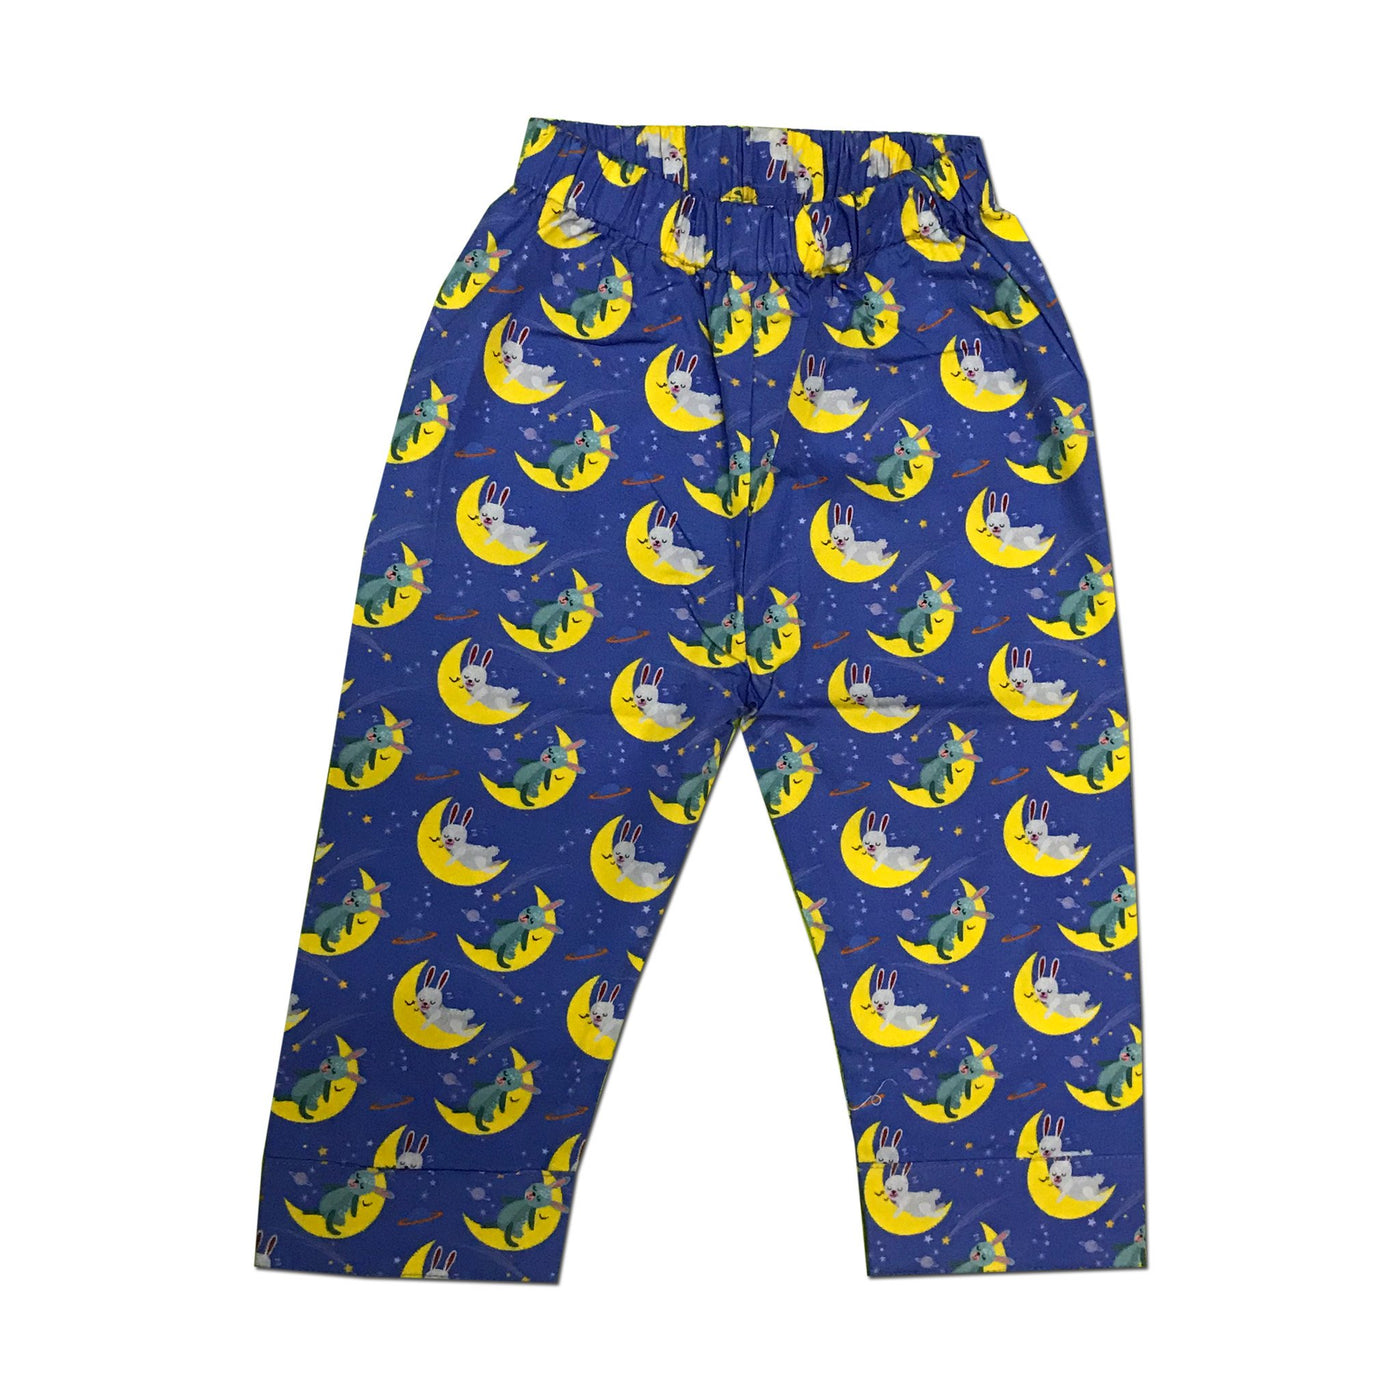 Pyjama set for Girls - Pleats Style Sleeping Bunny Joey Care